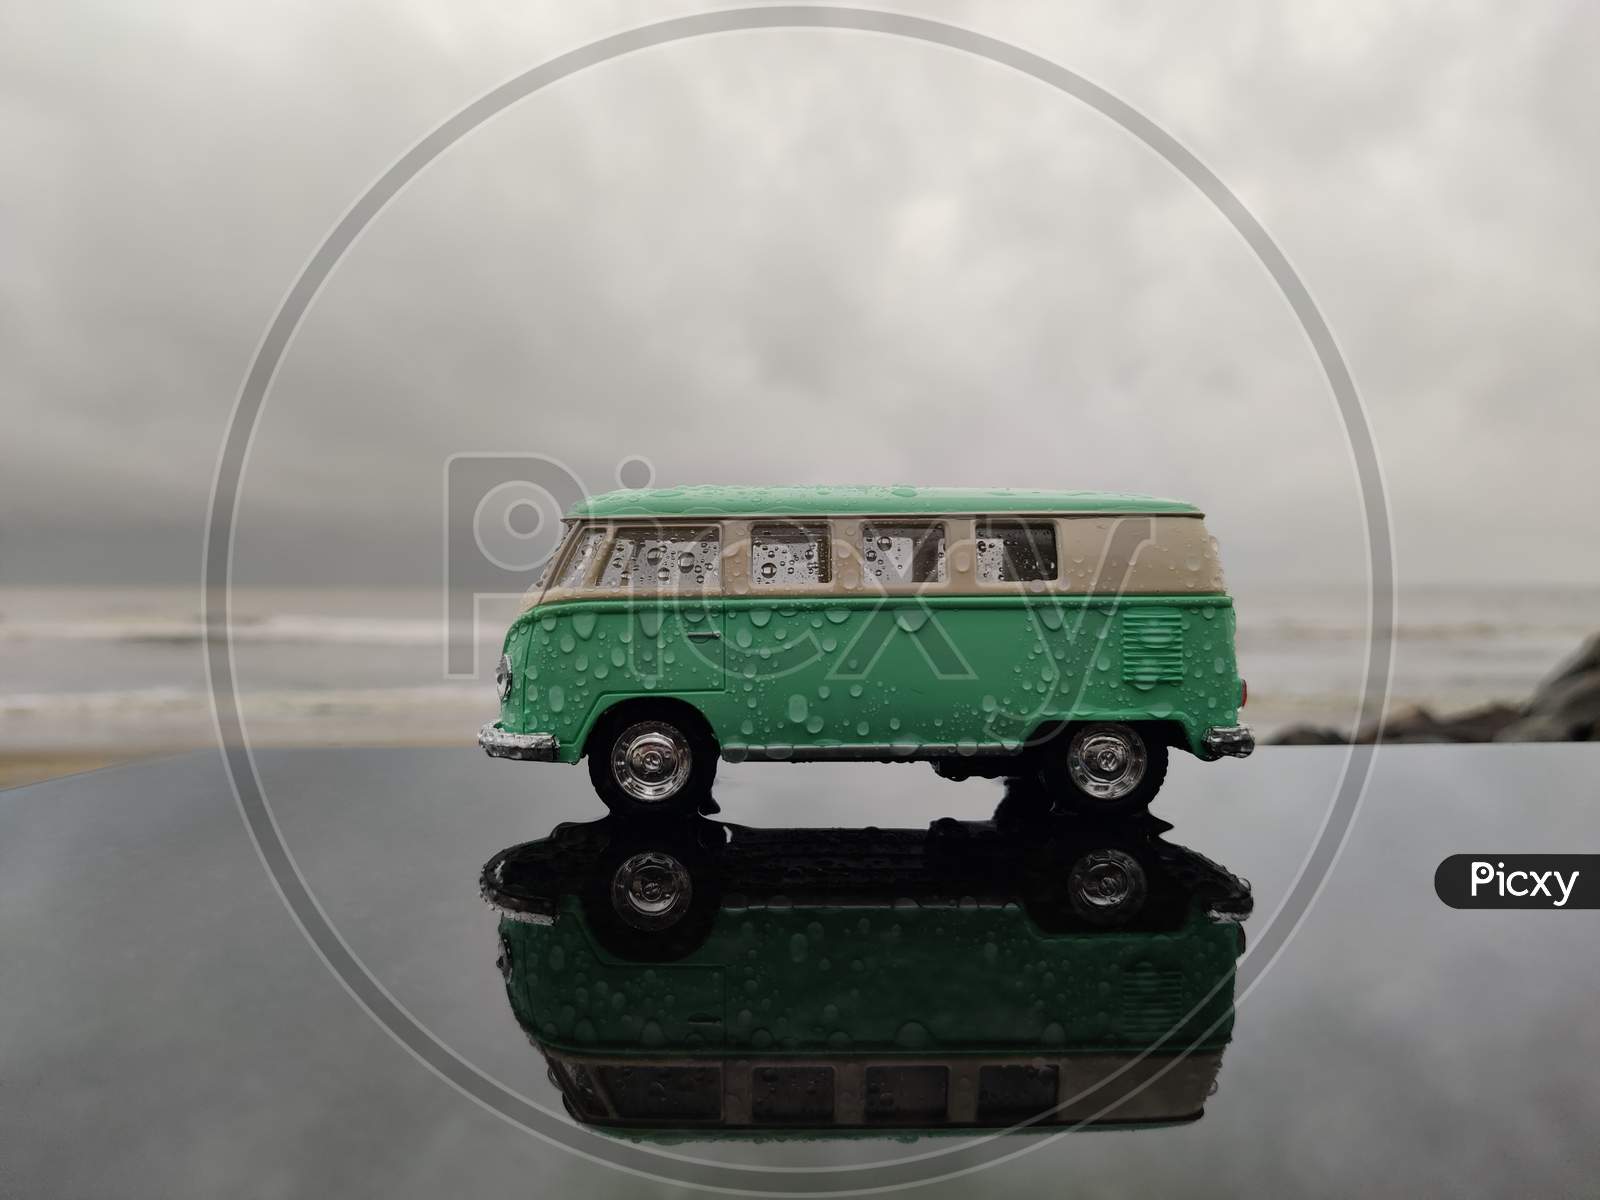 rainy moody image of vintage toy van with beach background